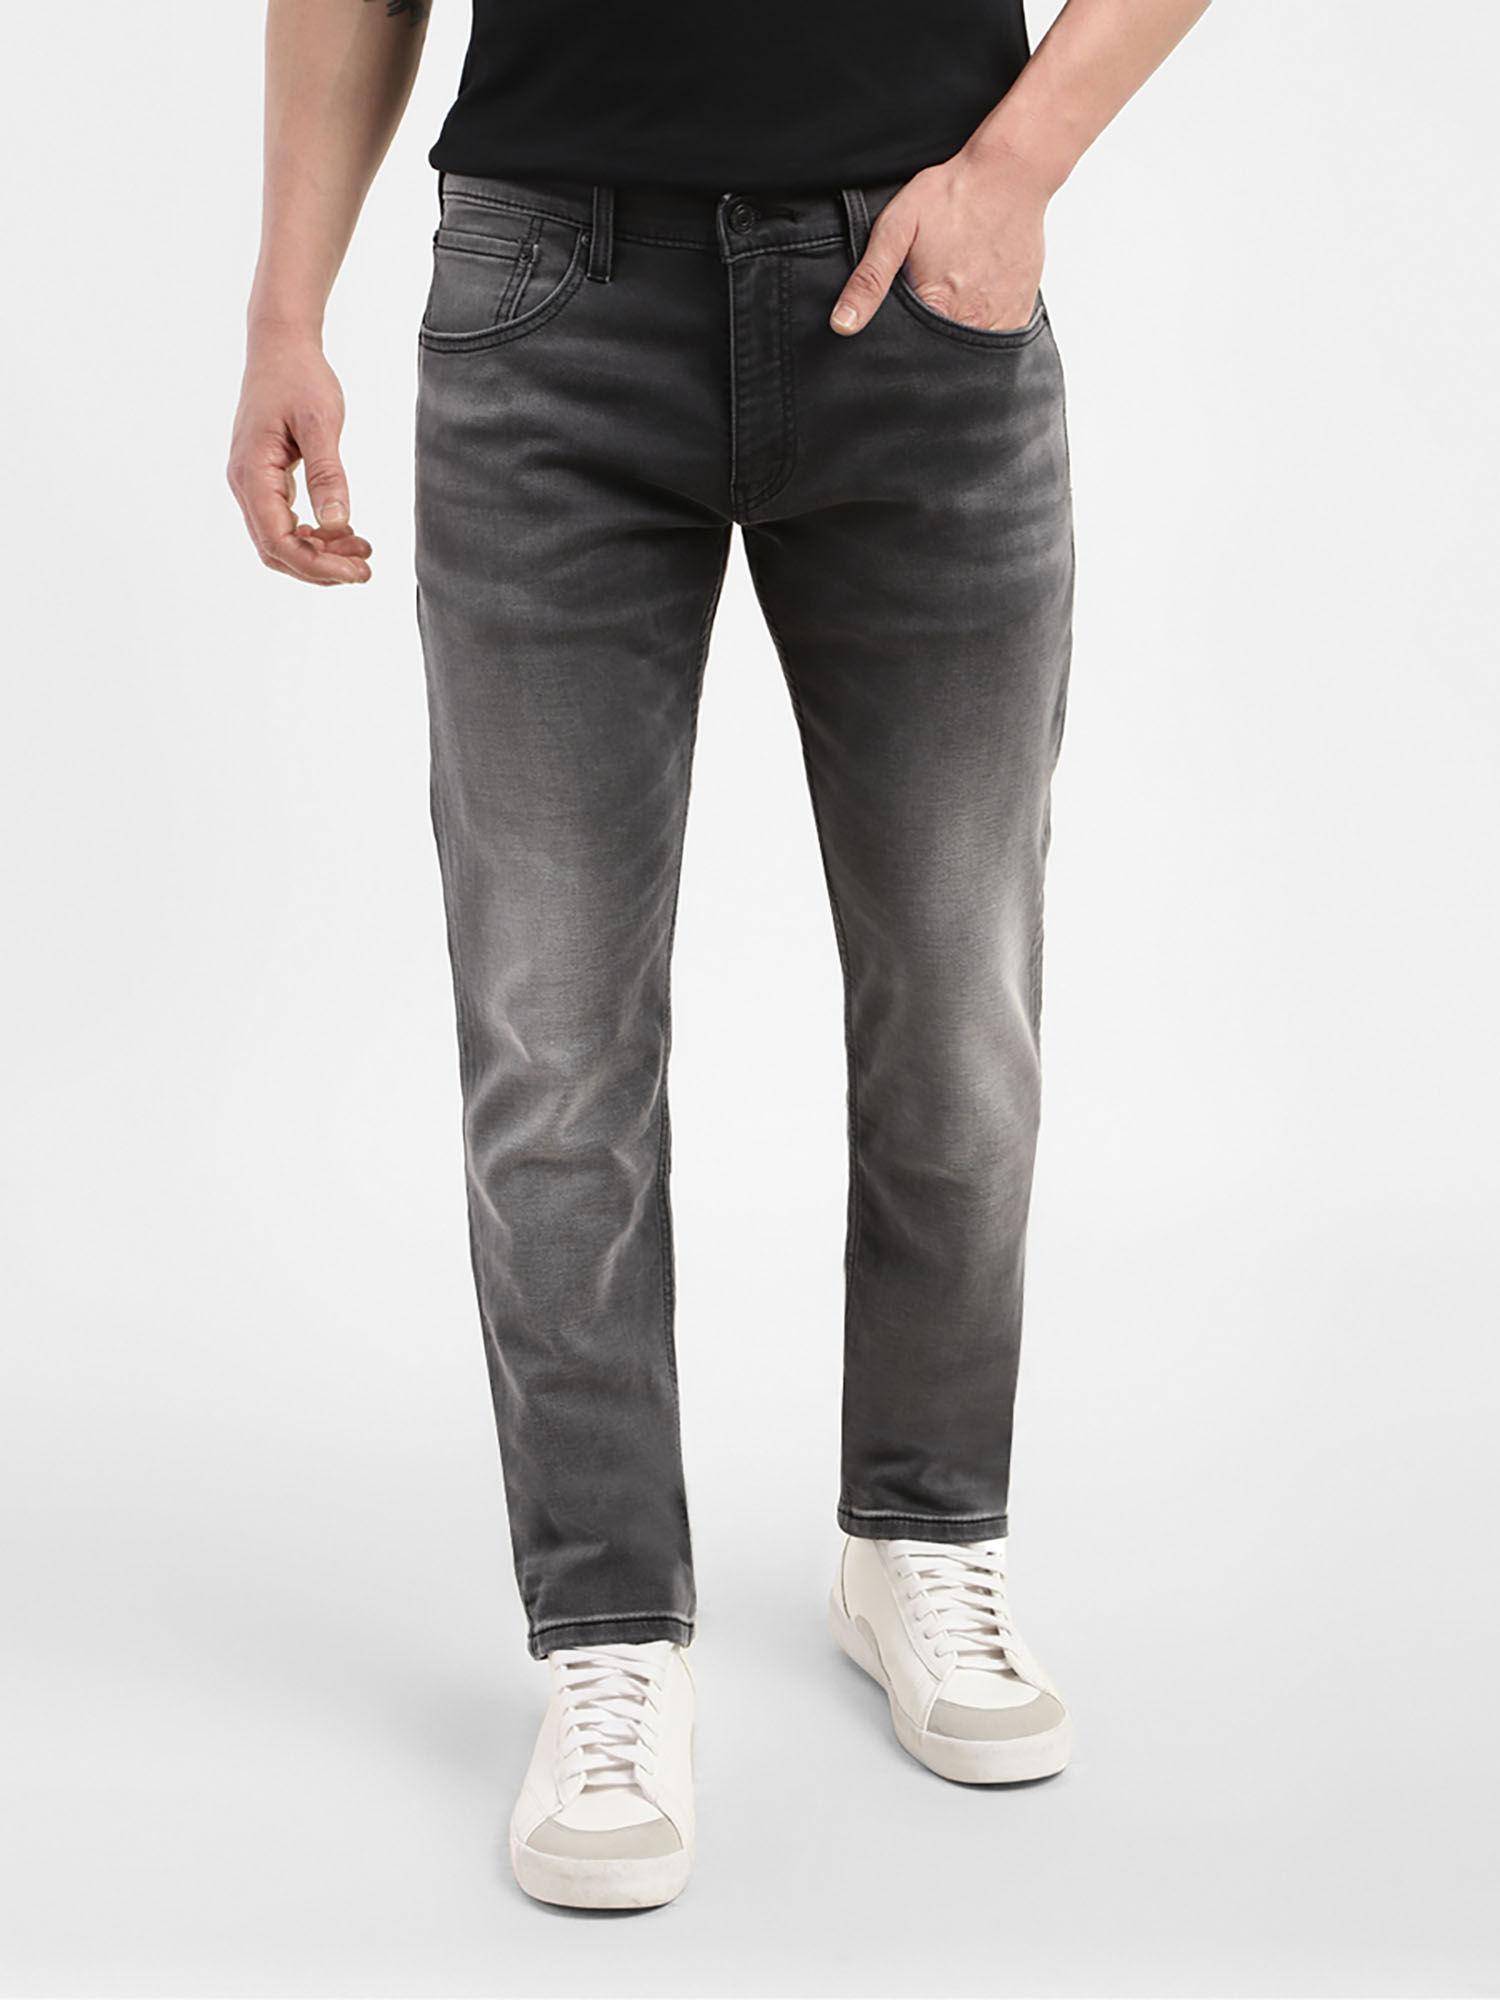 men's 65504 grey skinny fit jeans